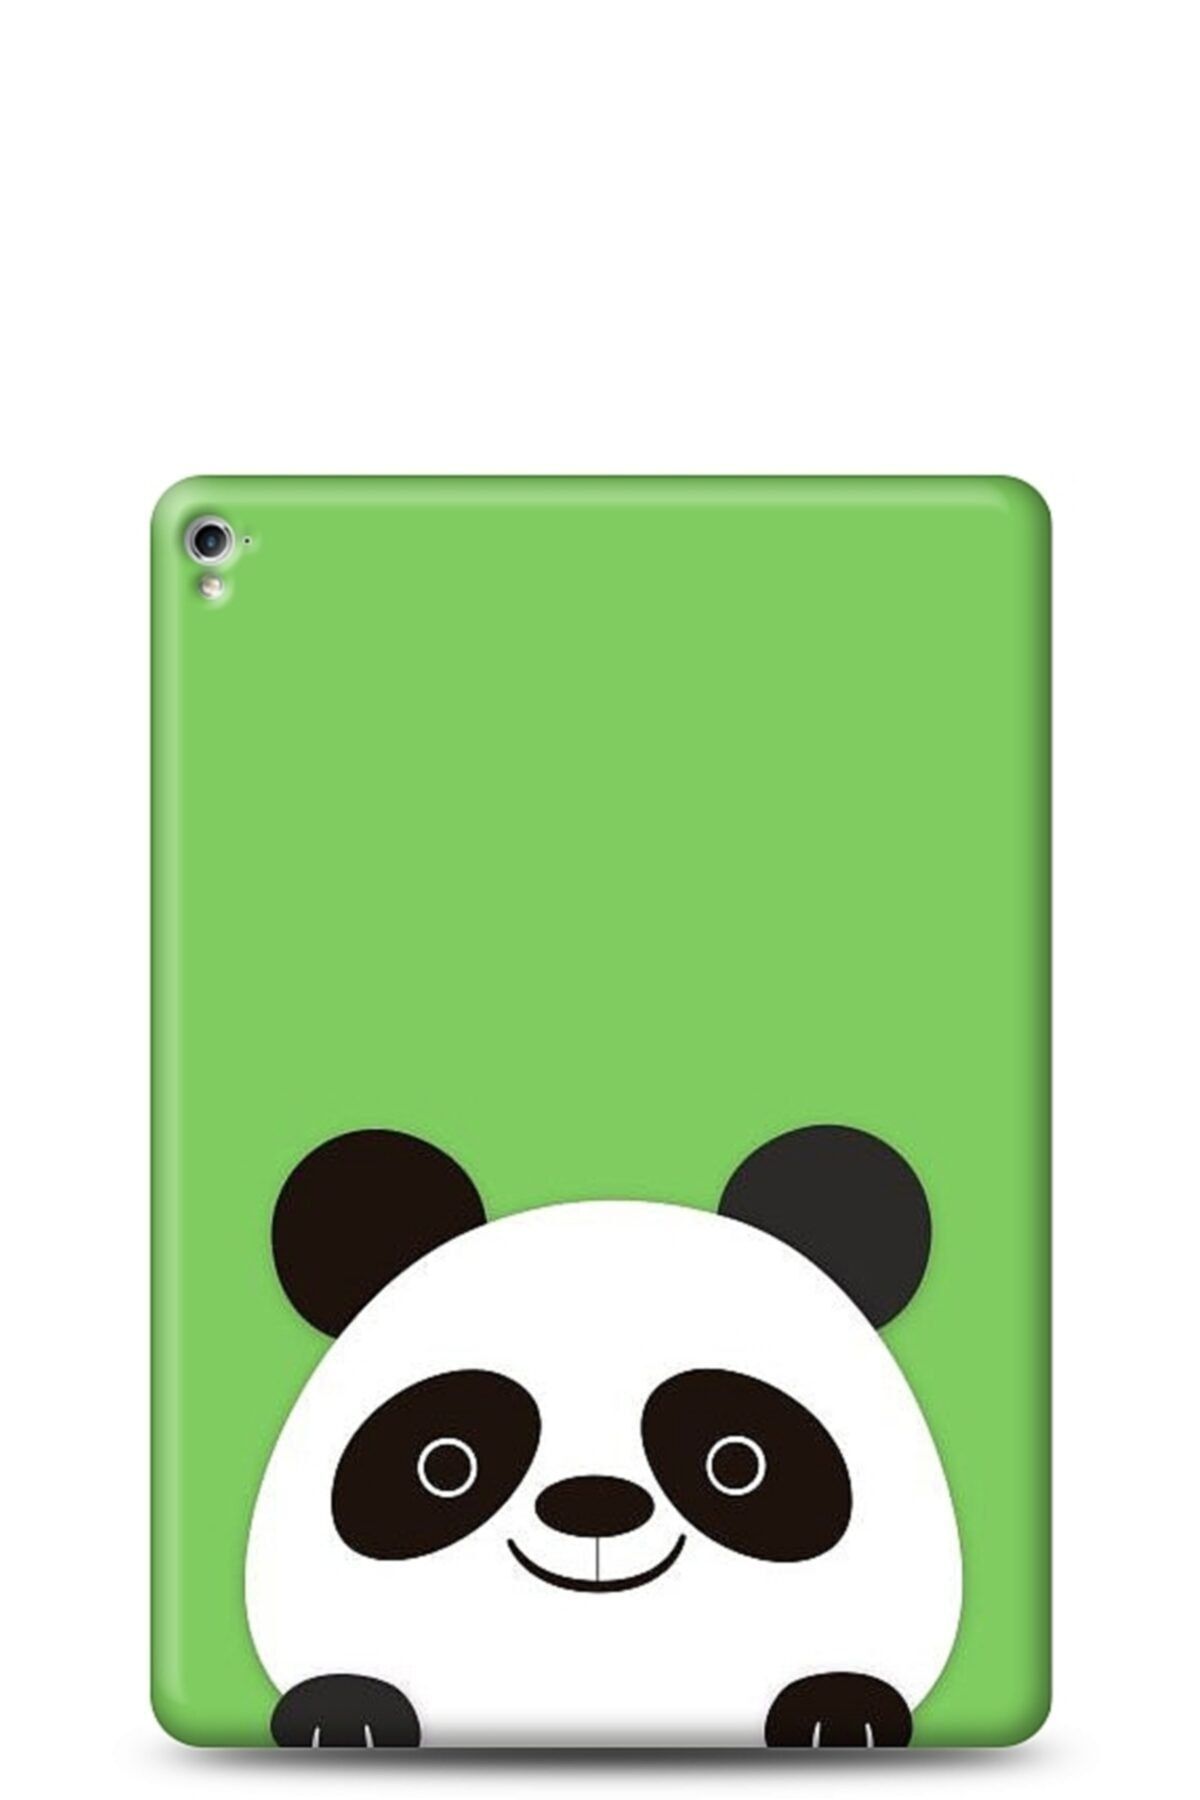 Mobilcadde Ipad Pro 12.9 2017 Panda Resimli Kılıf